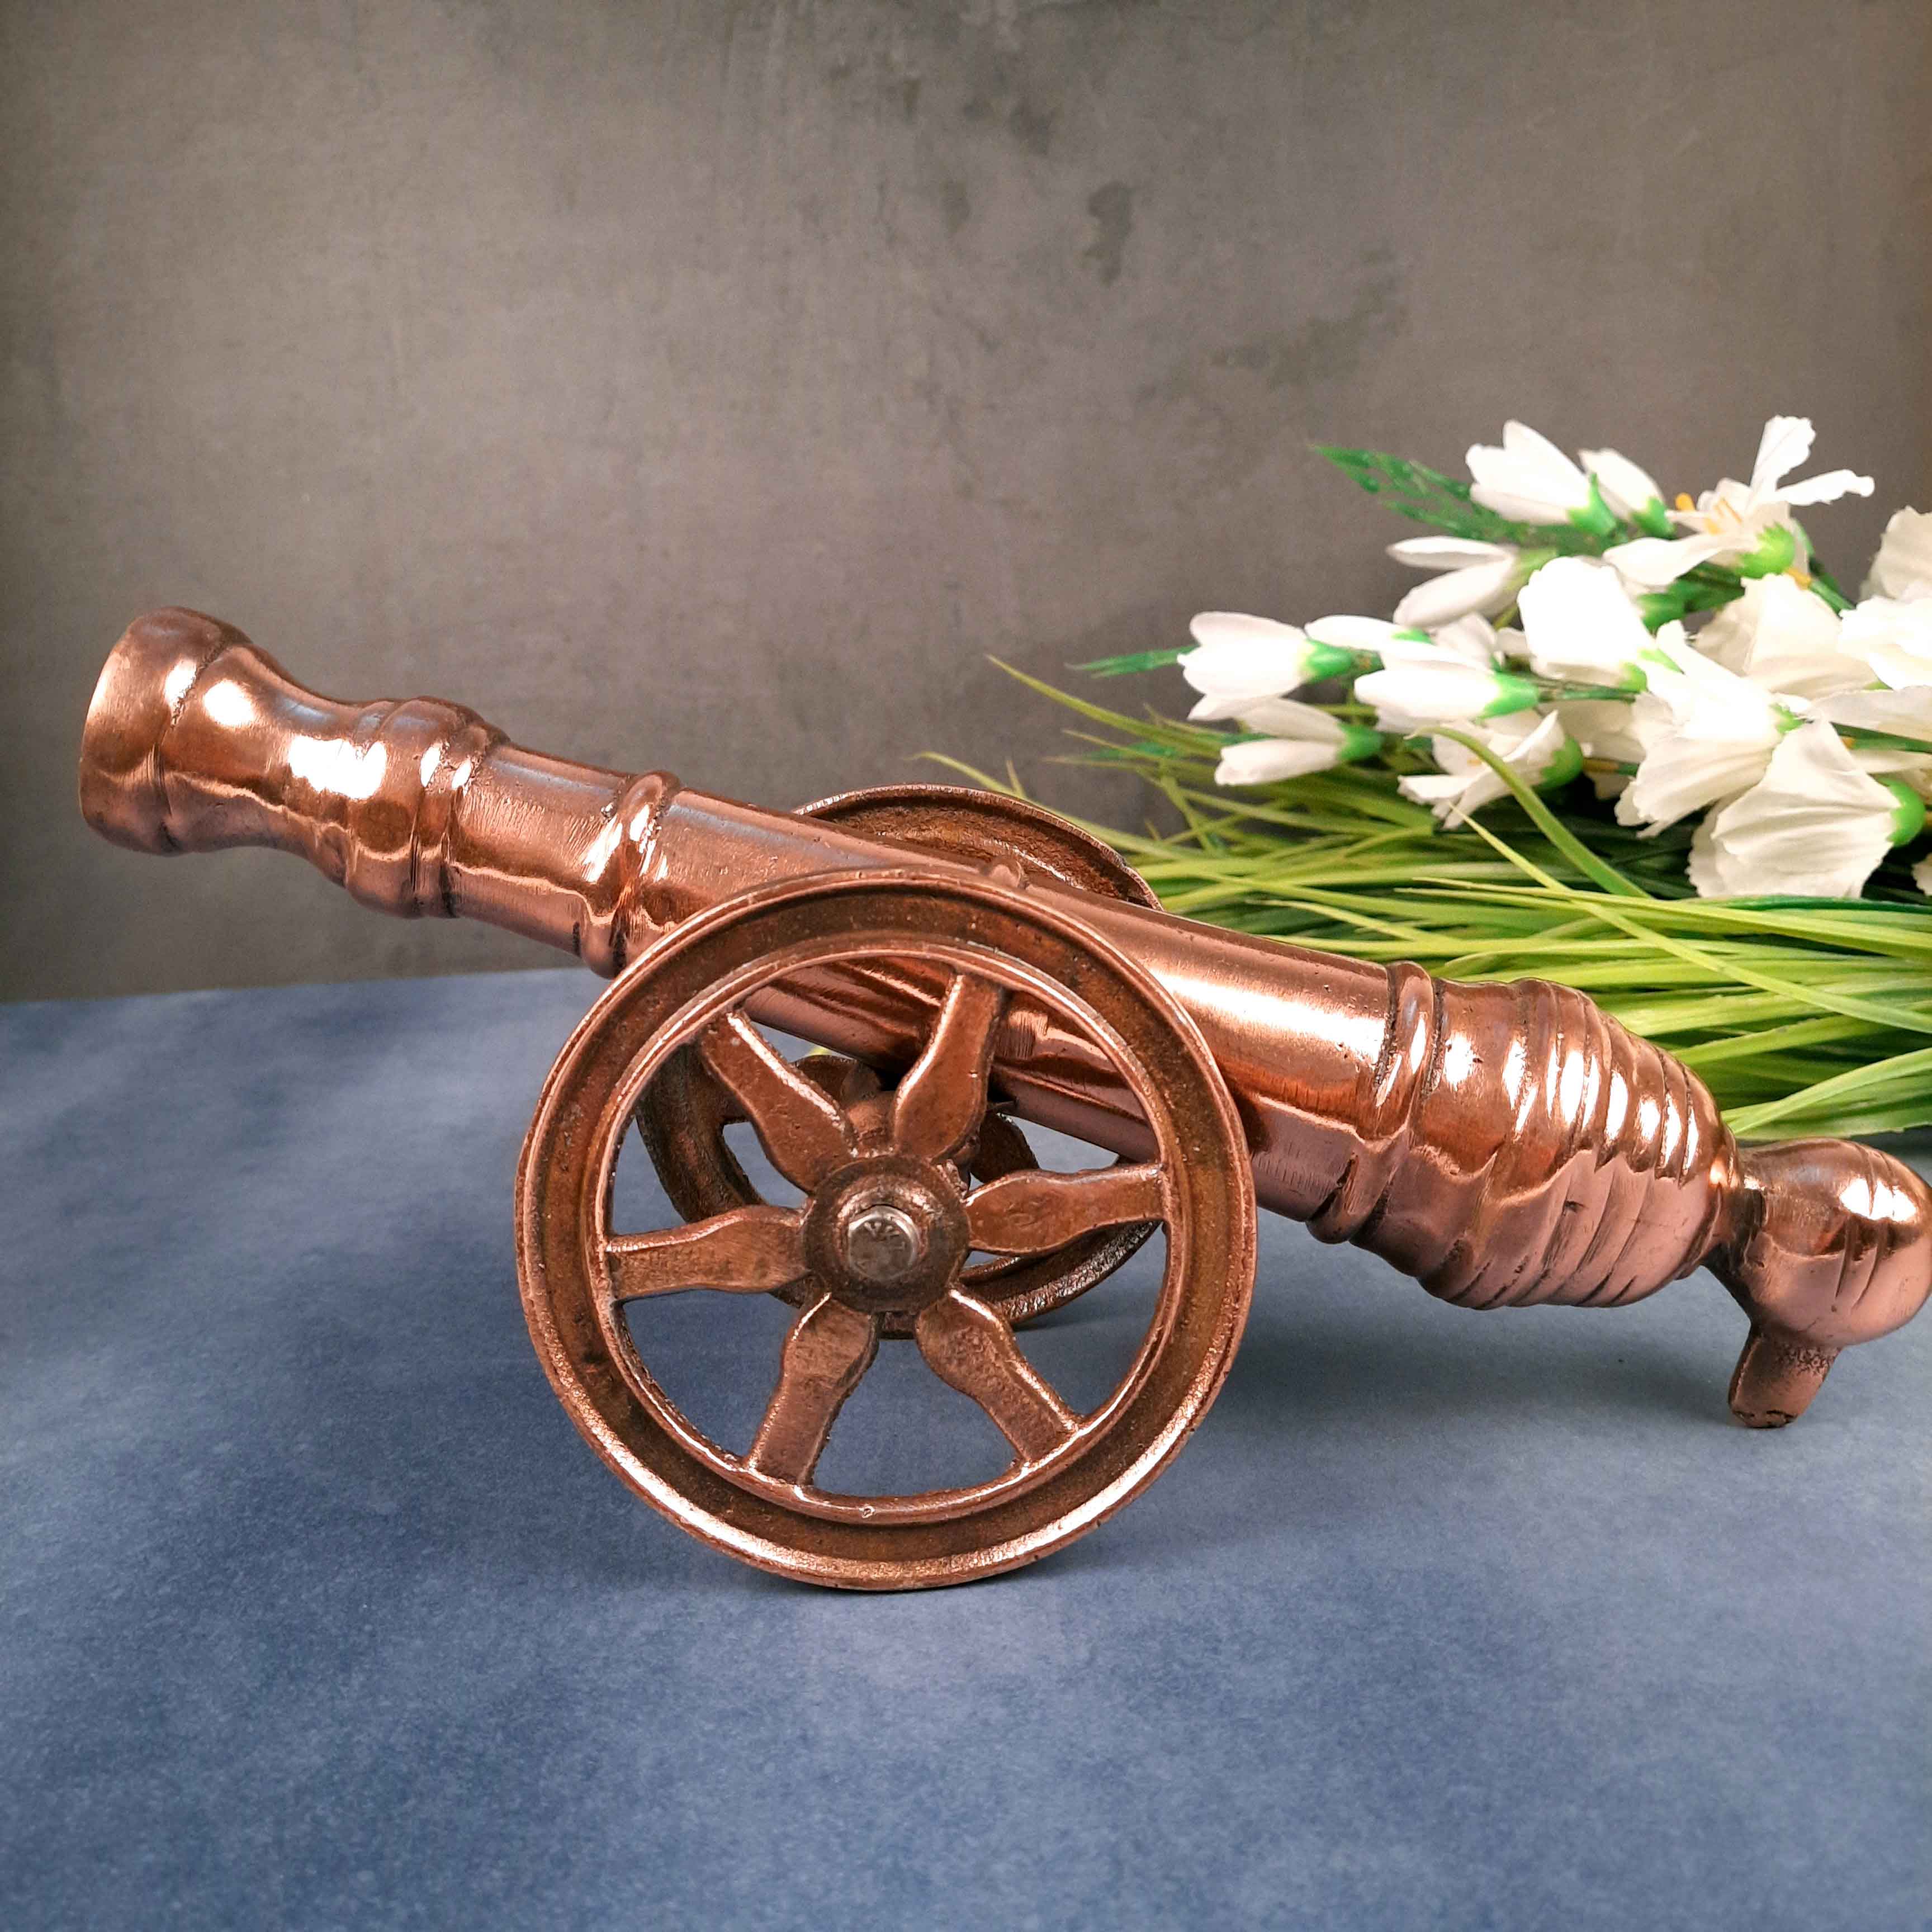 Cannon Single Barrel - Decorative Showpiece for Table & Office Decor - 13 Inch - Apkamart